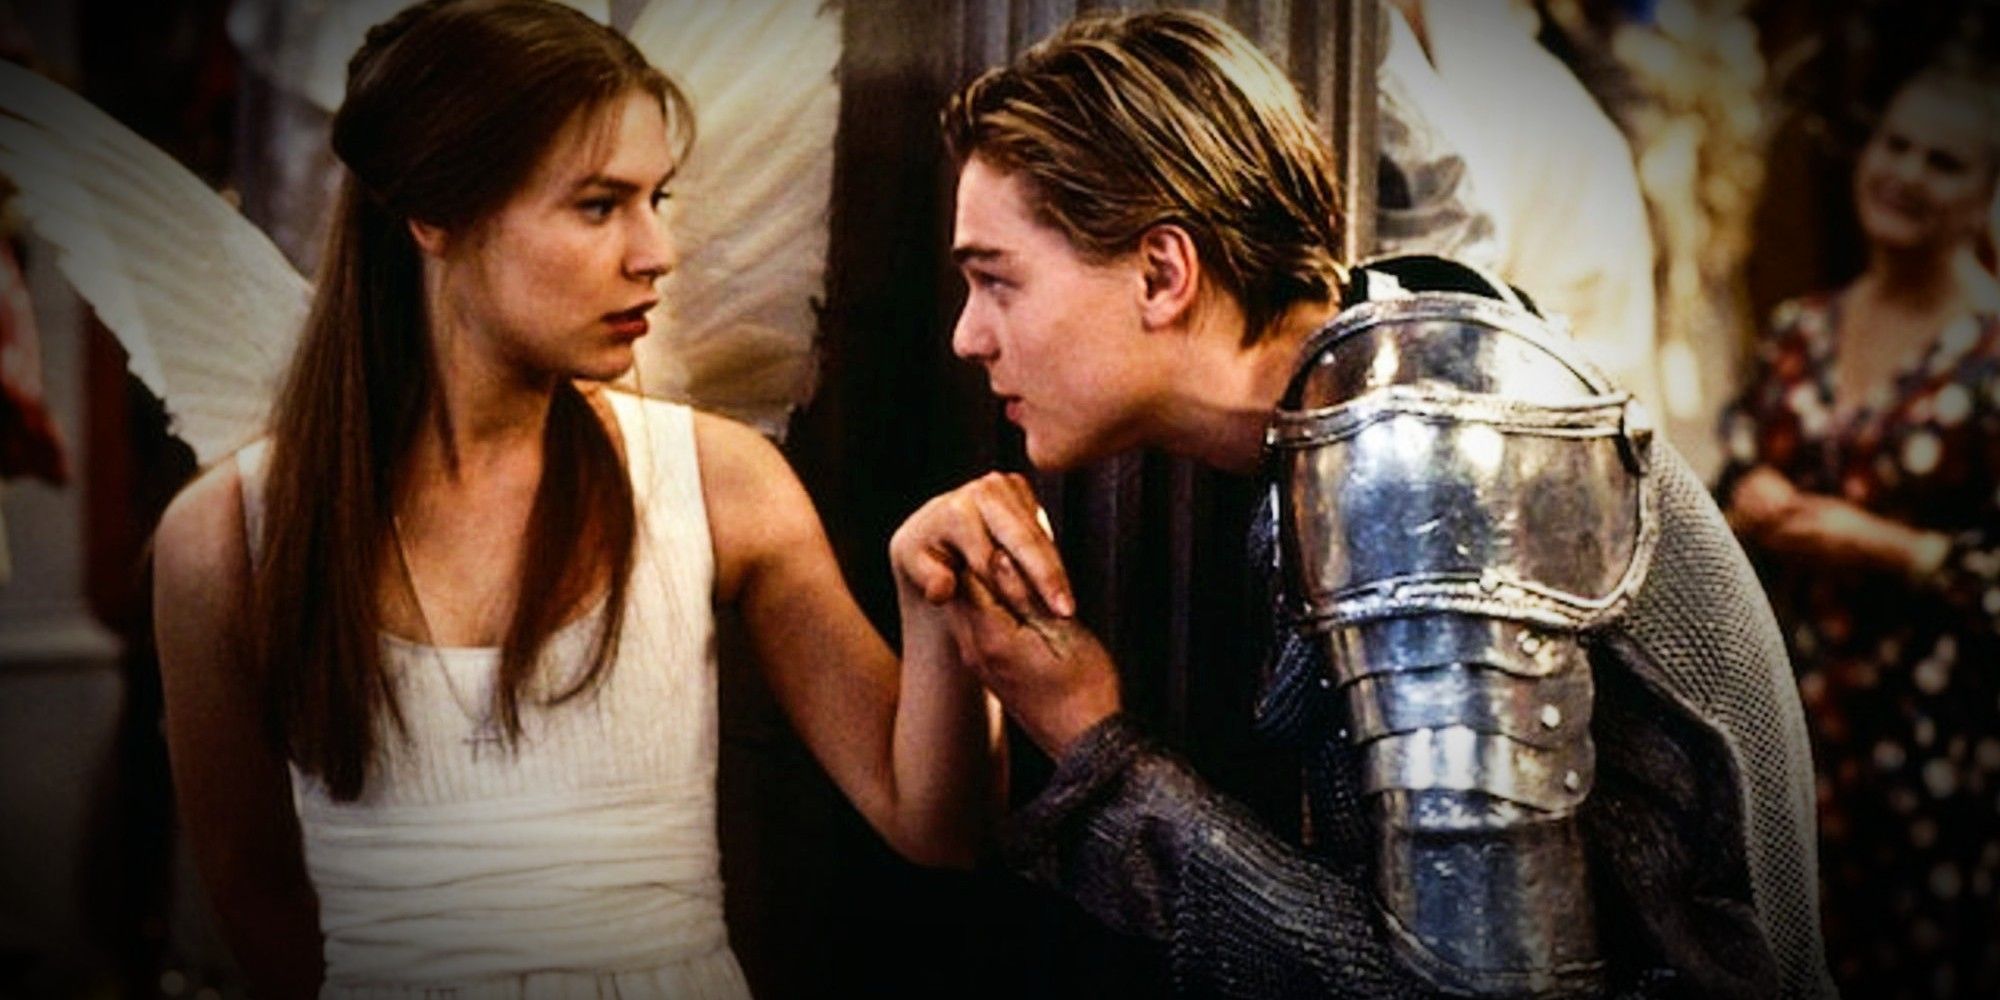 Romeo kissing Juliet's hand in Romeo + Juliet